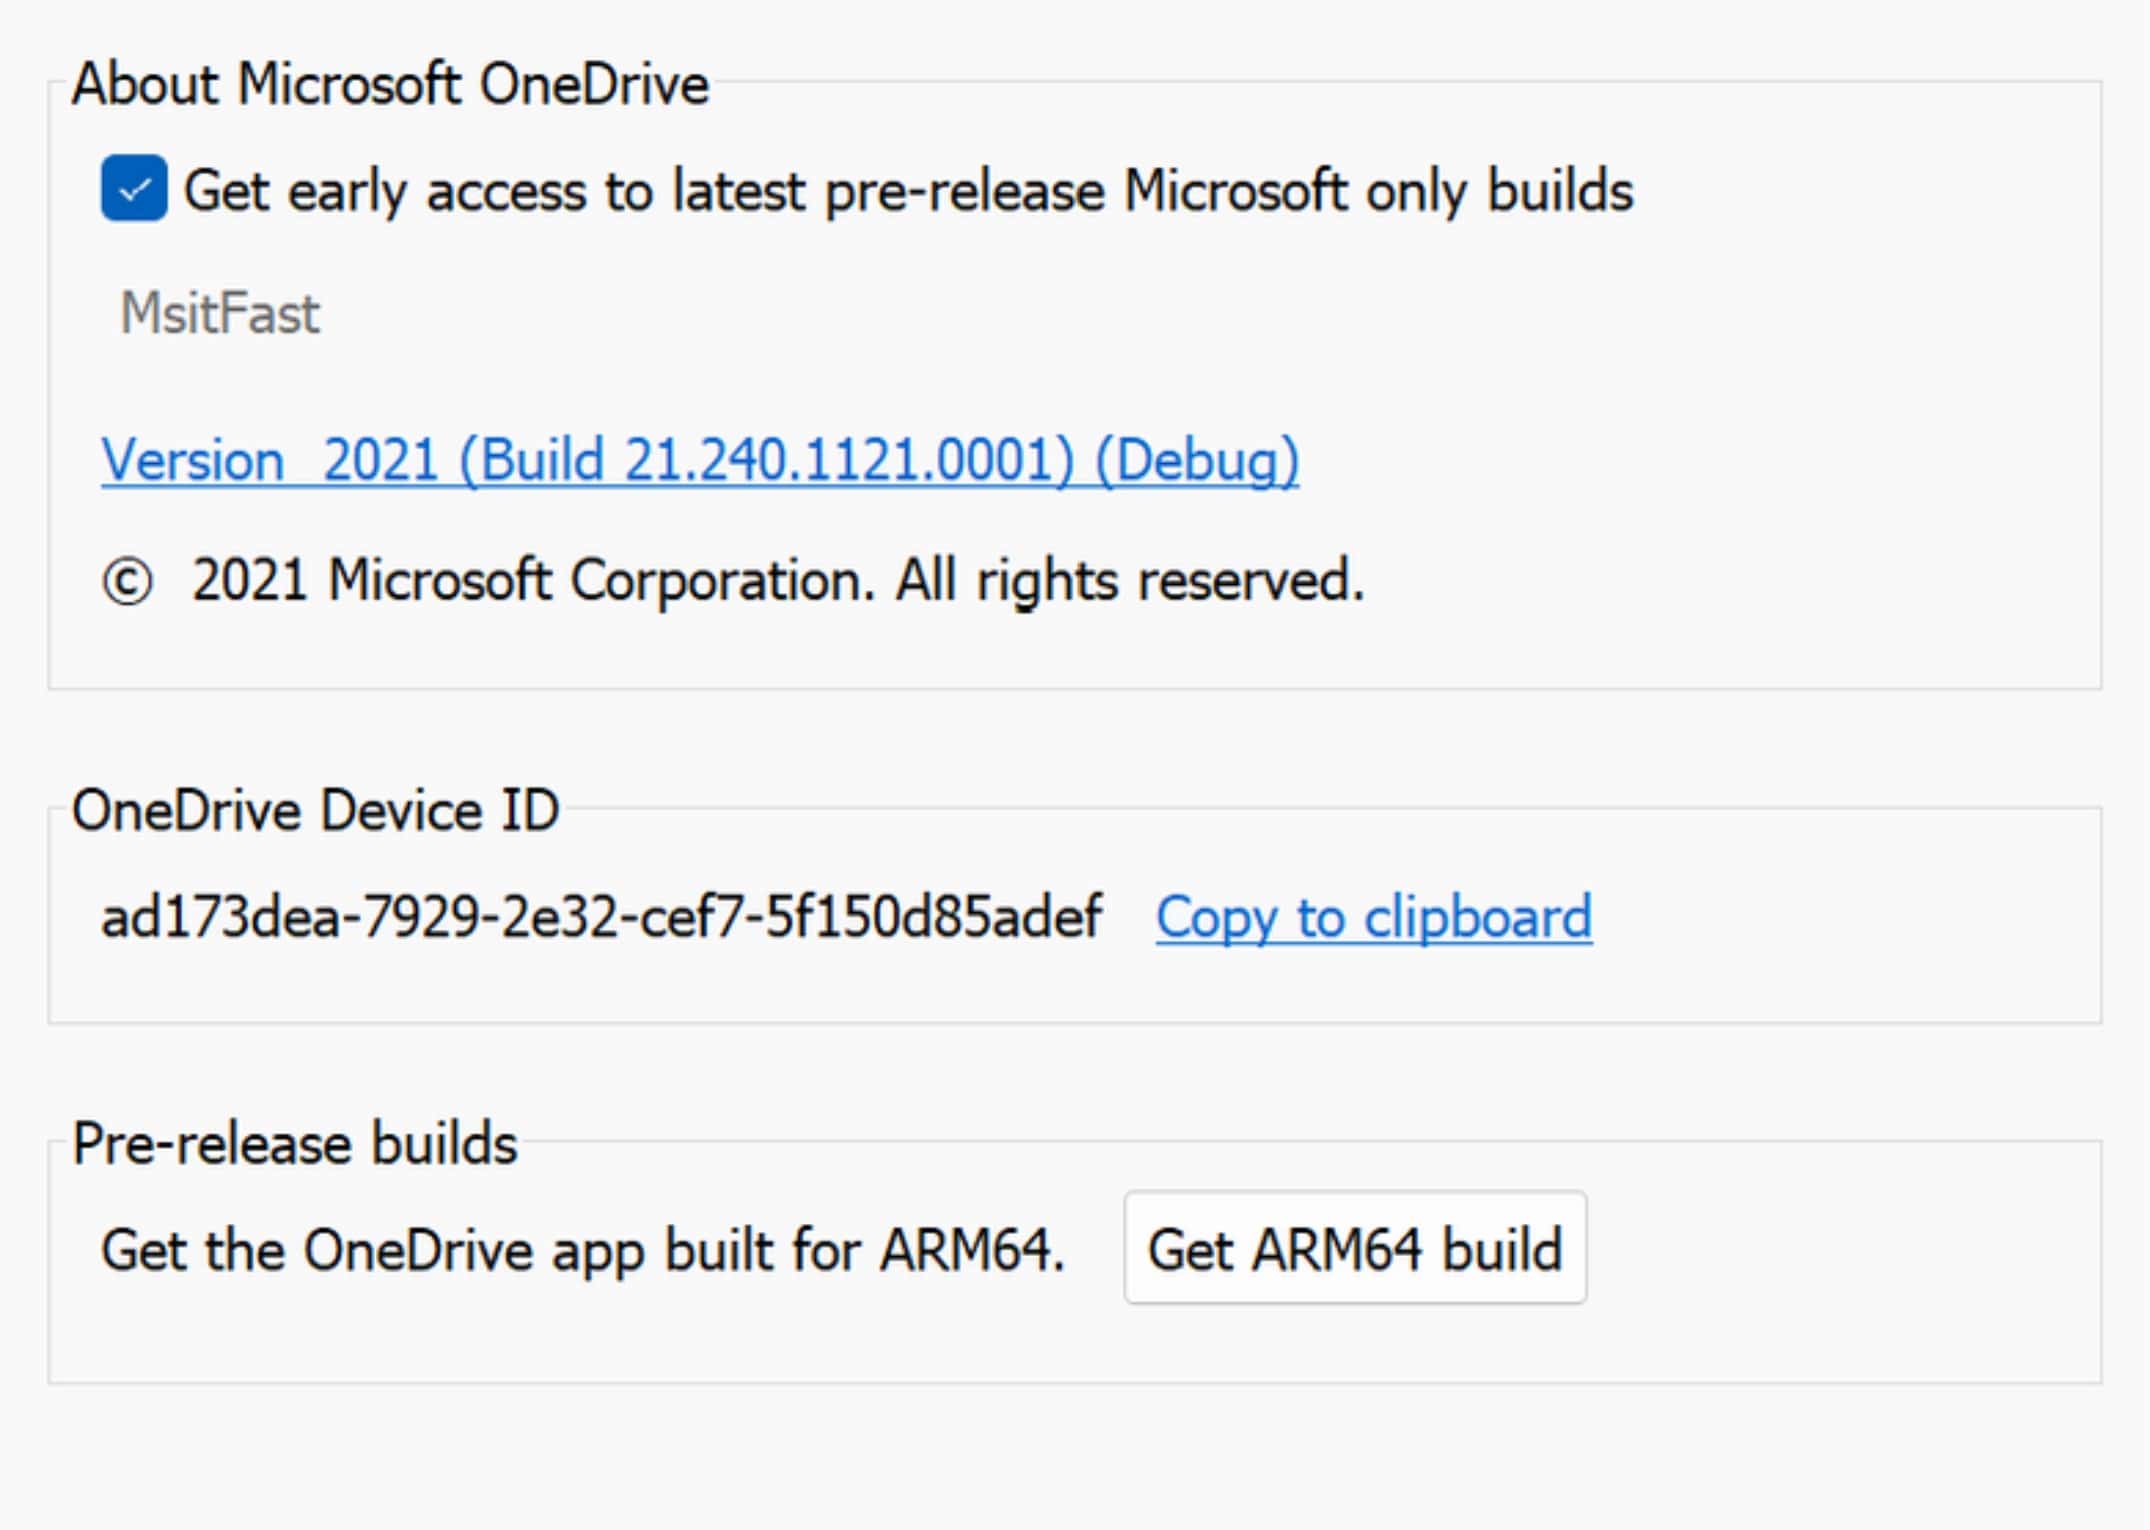 Microsoft OneDrive on ARM